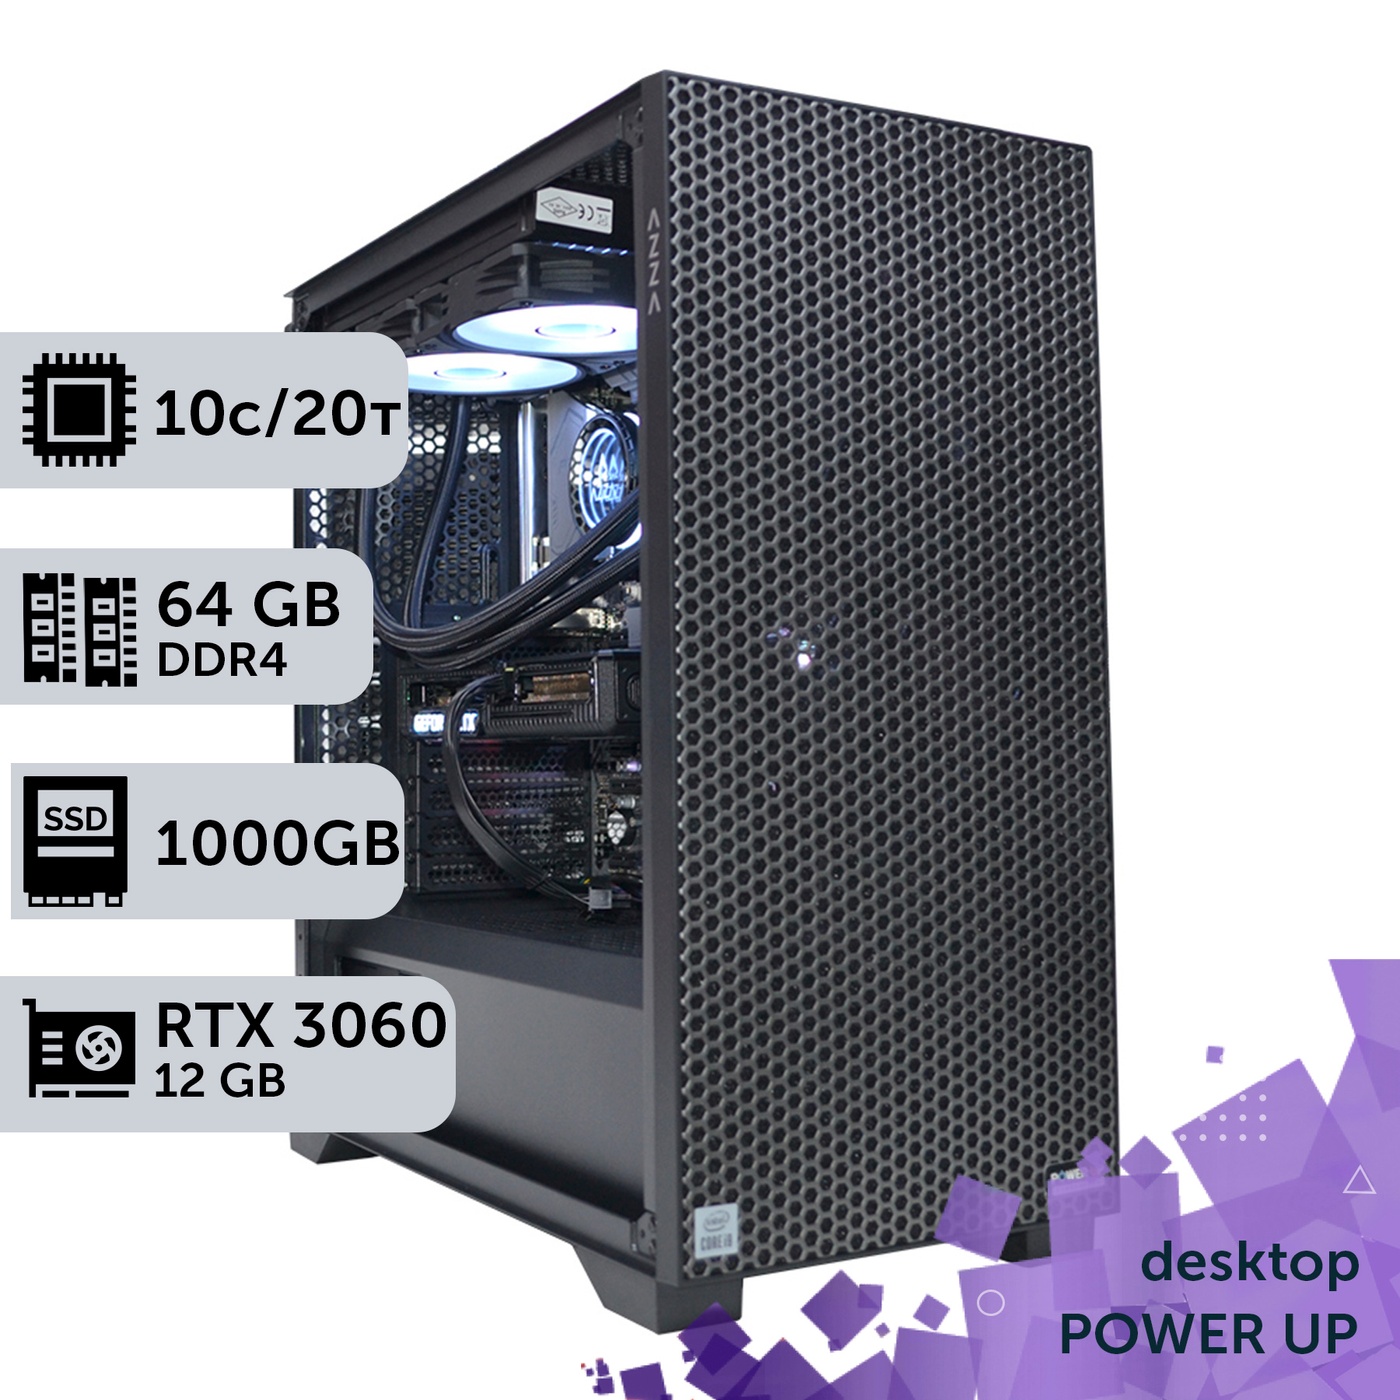 Рабочая станция PowerUp Desktop #161 Core i9 10900K/64 GB/SSD 1TB/GeForce RTX 3060 12GB